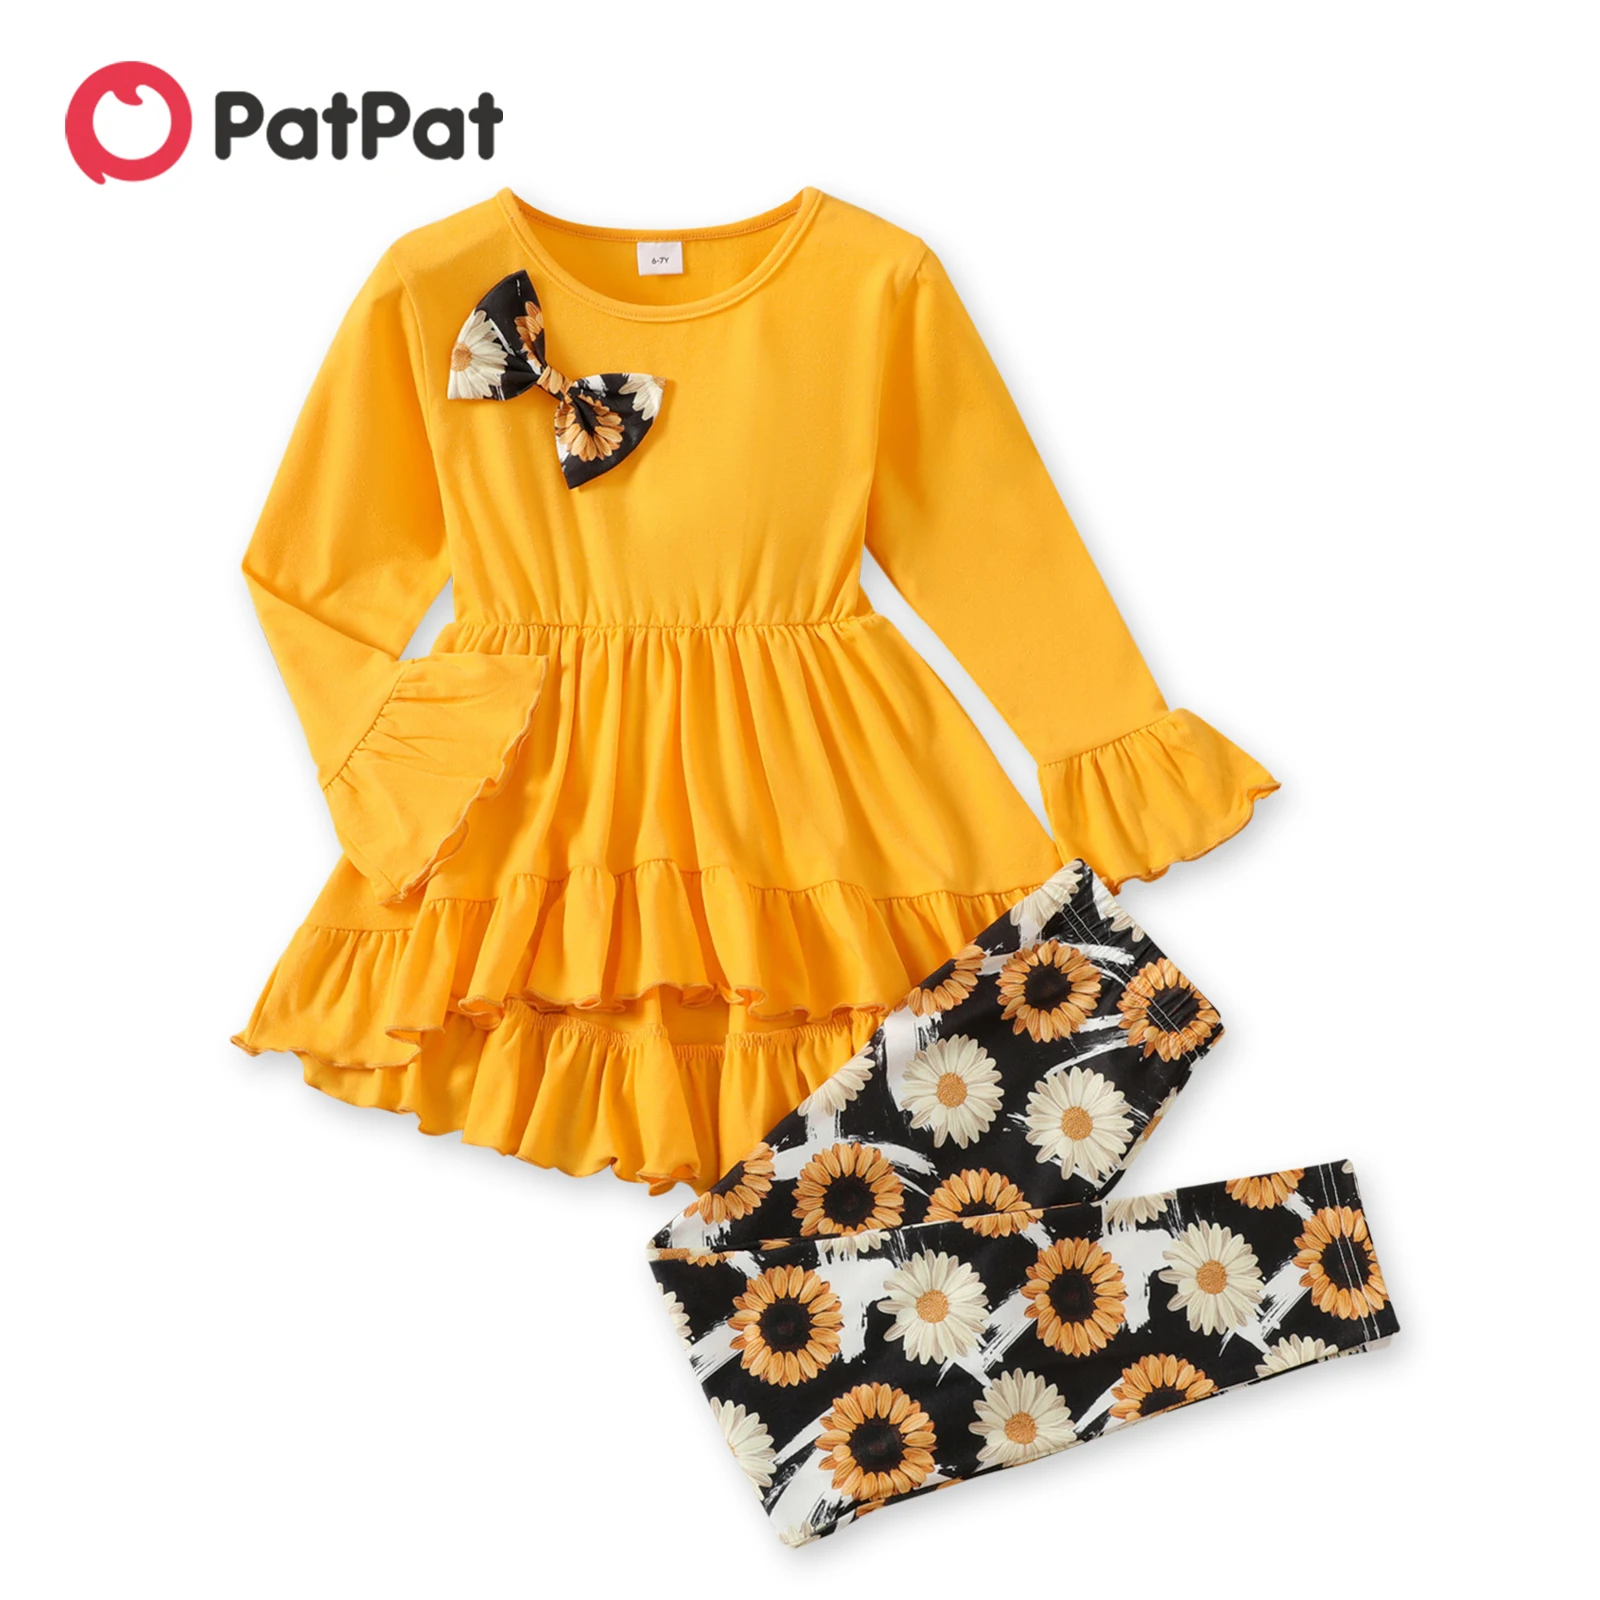 

PatPat 2-piece Kid Girl Bowknot Design Ruffled Long Bell sleeves High Low Top and Floral Print Leggings Set